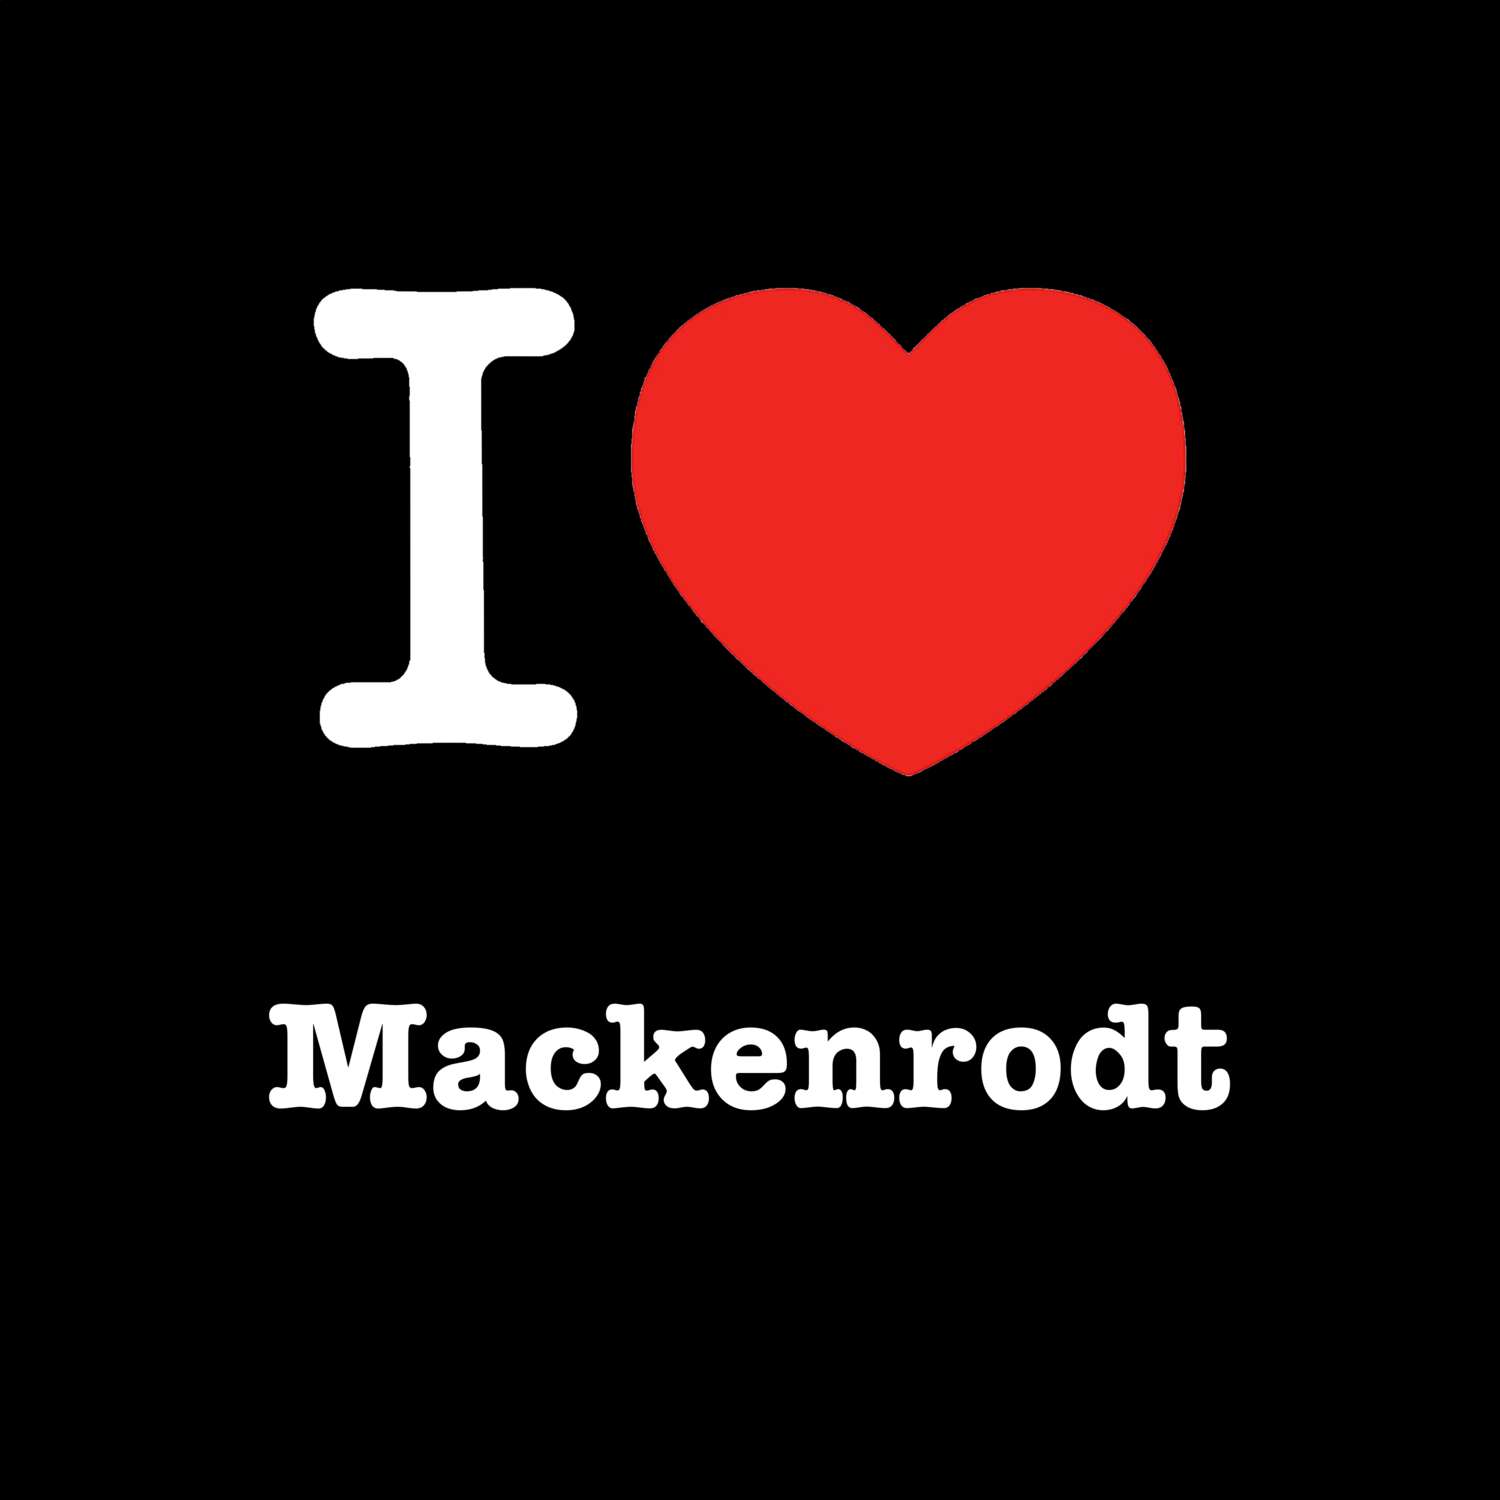 Mackenrodt T-Shirt »I love«